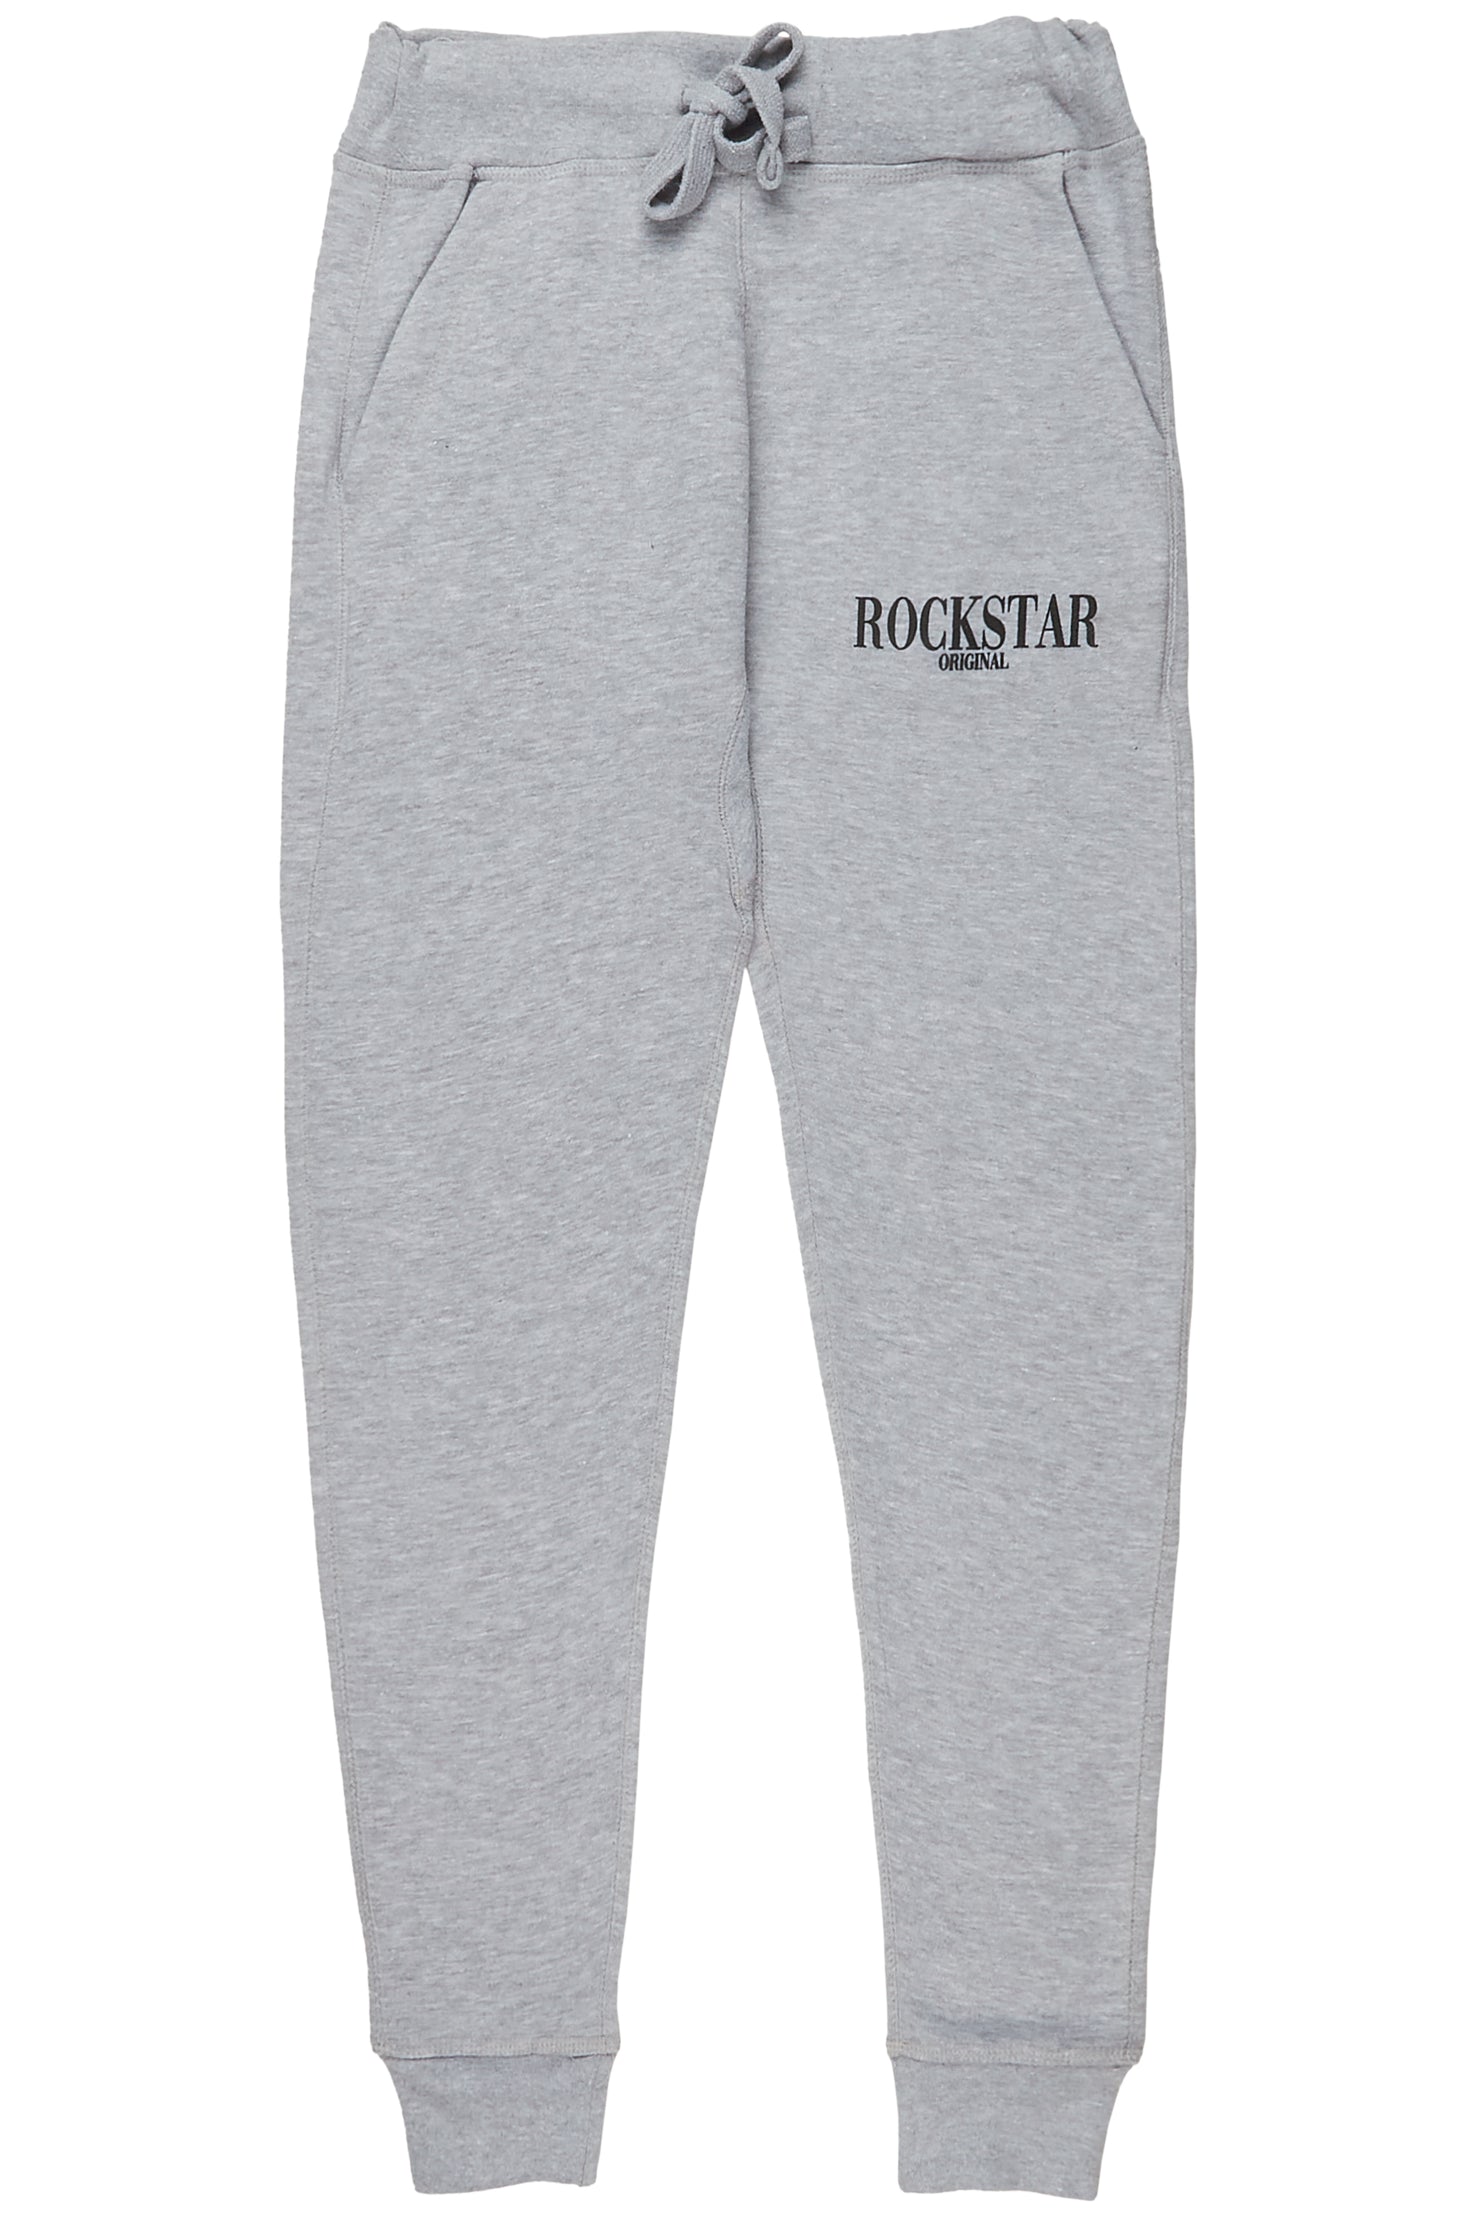 Boston Basic Jogger-Grey